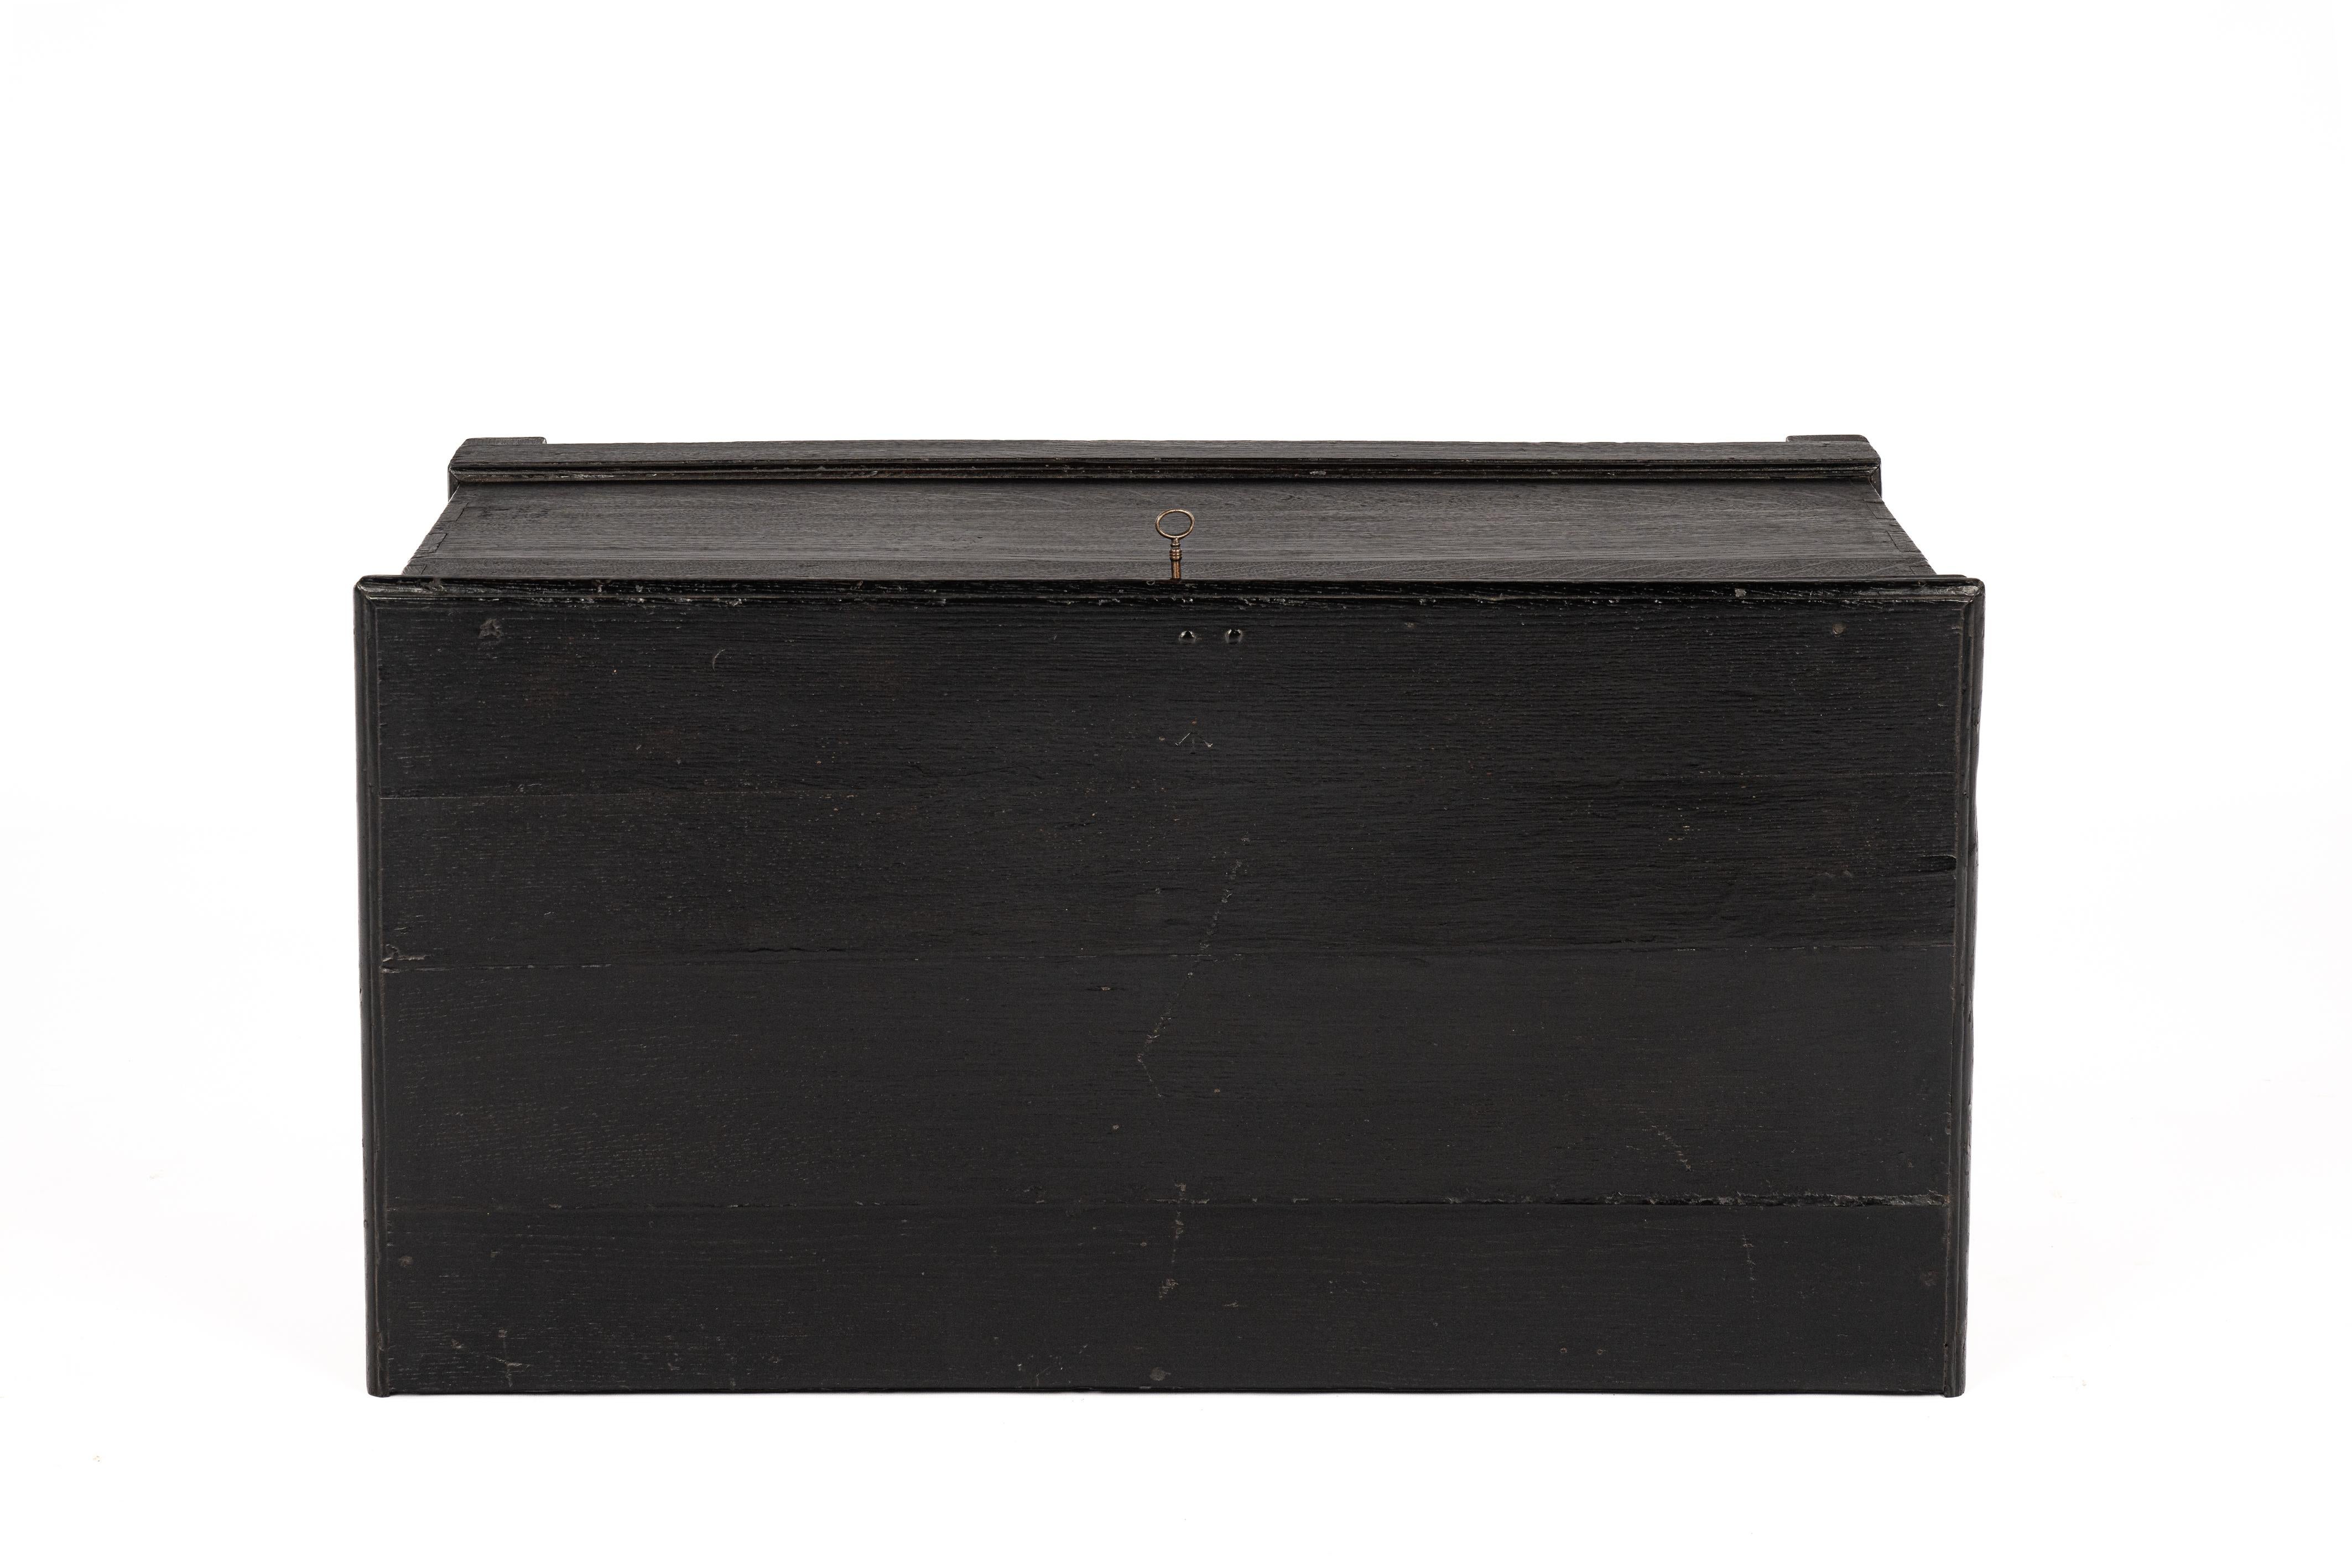 Antique 19th-century West German black oak blanket chest trunk or coffer For Sale 1